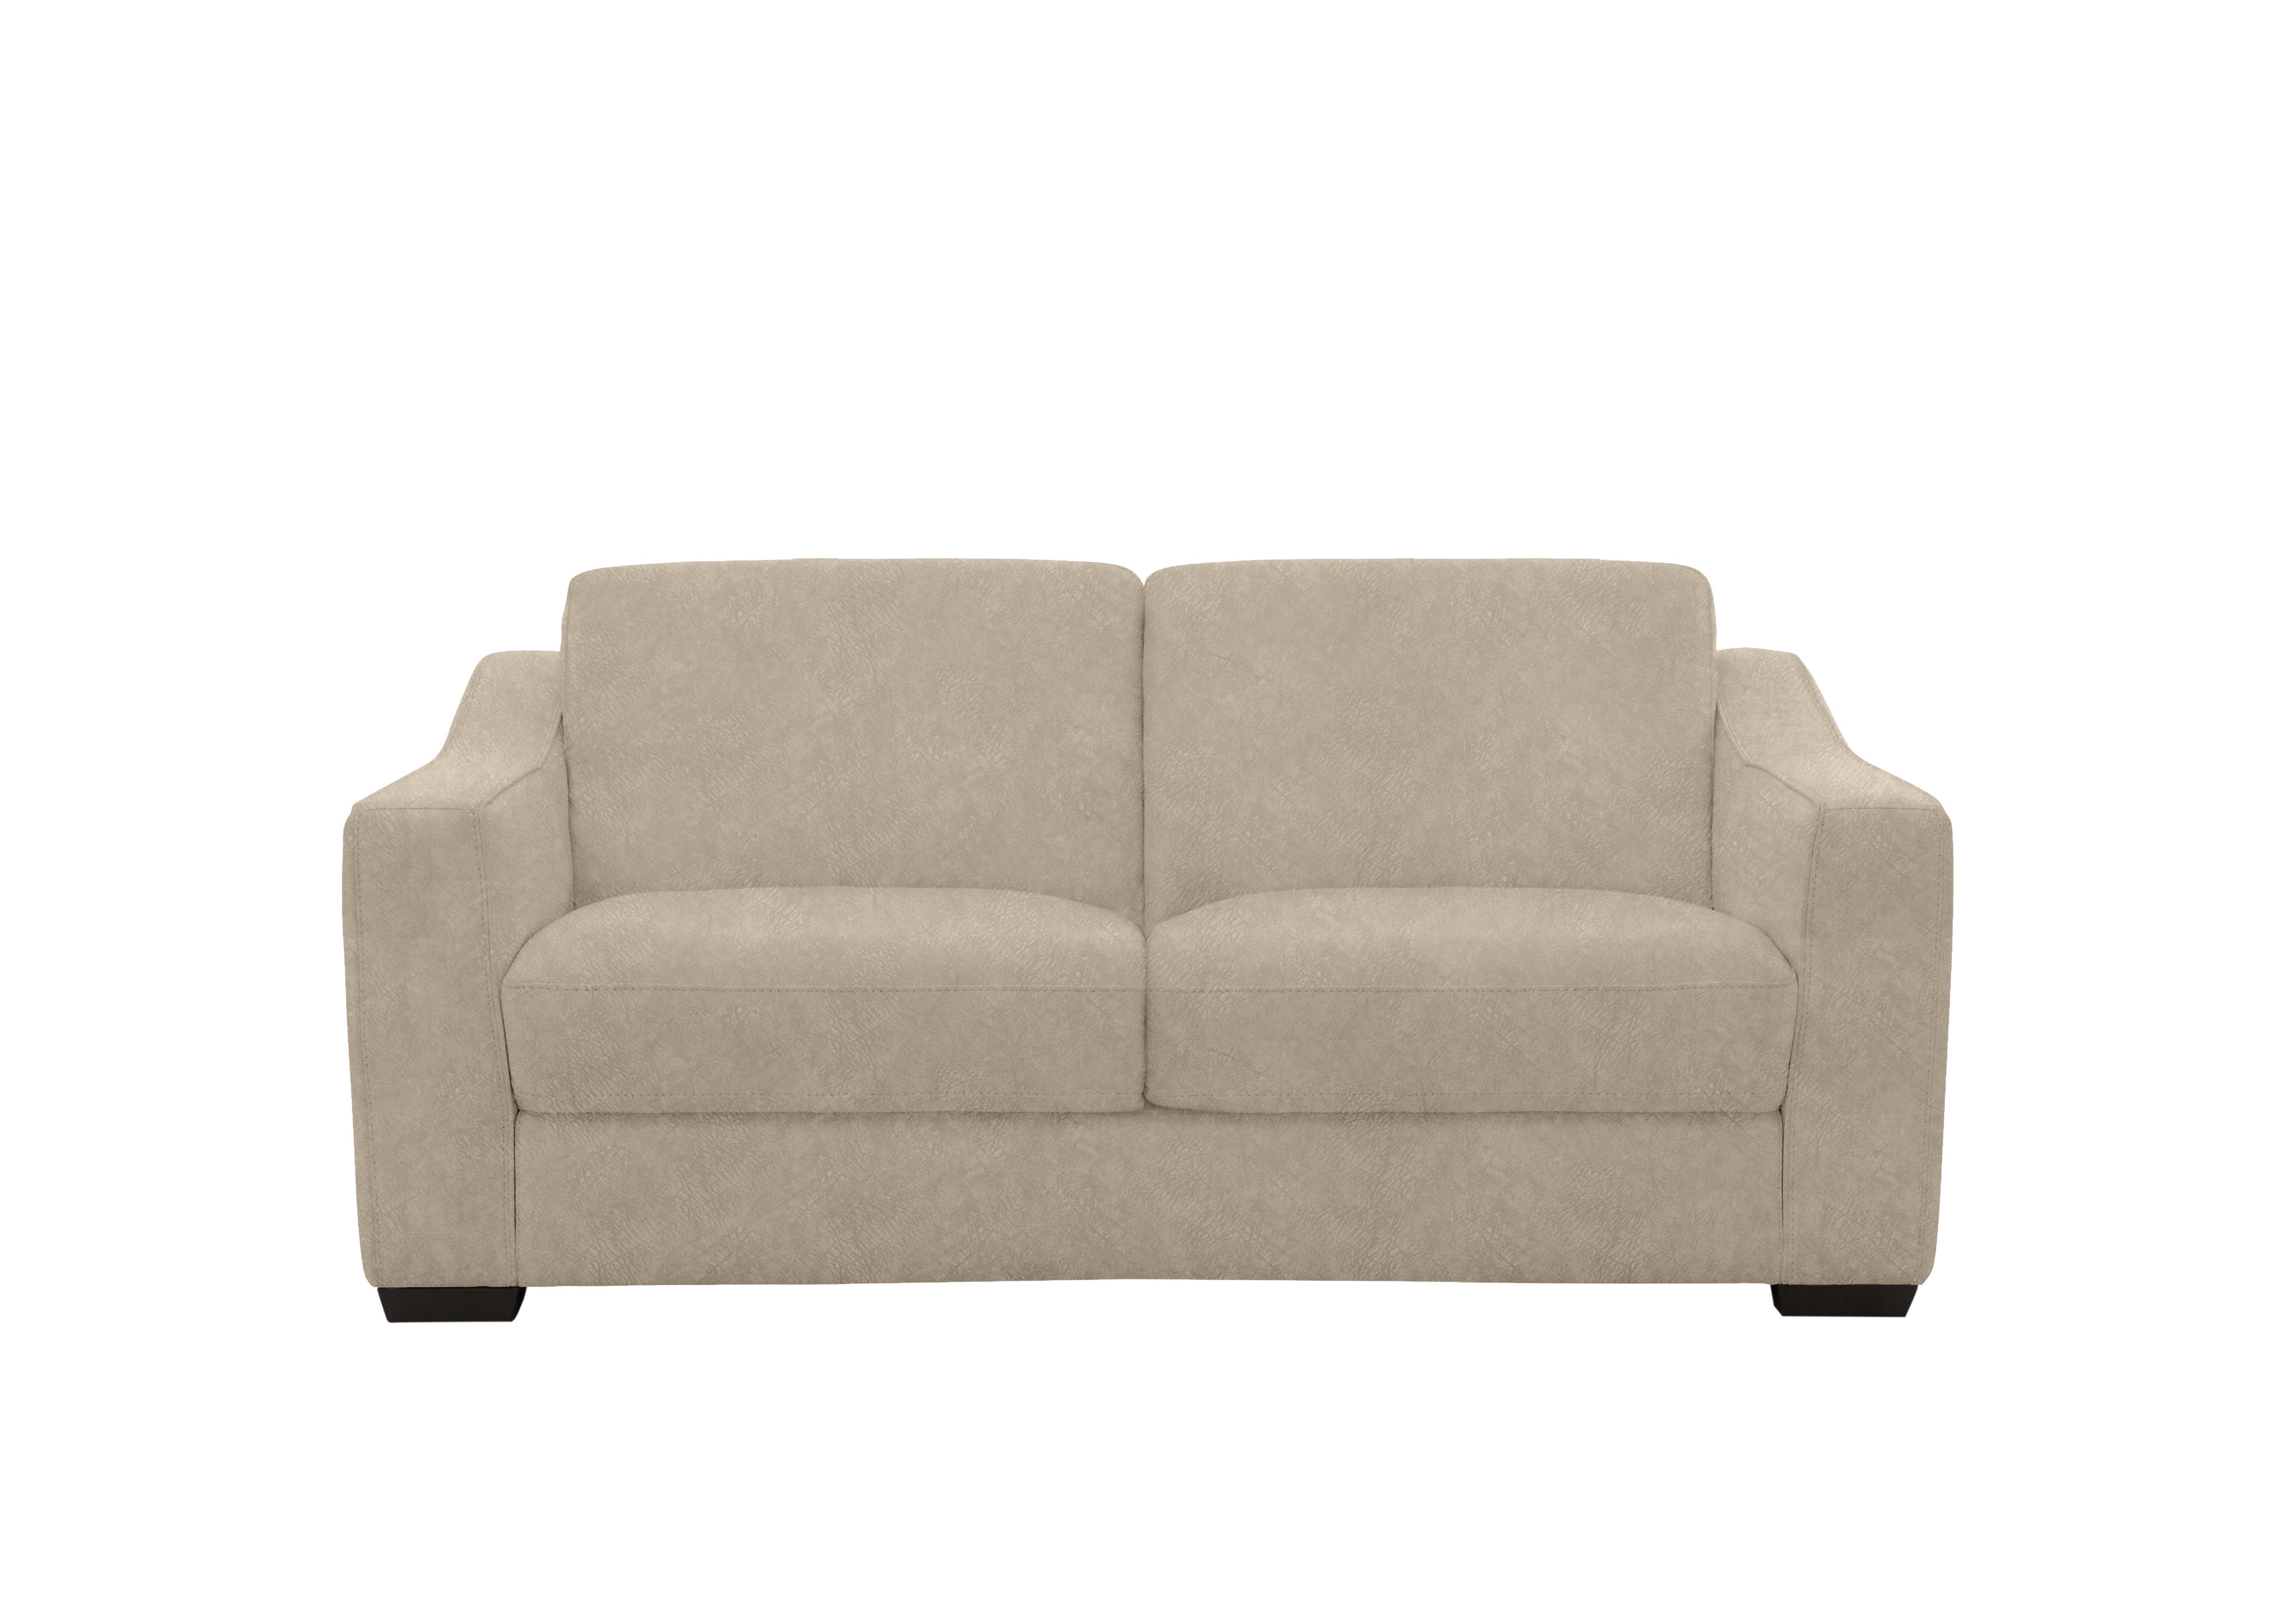 Optimus 2 Seater Fabric Sofa in Bfa-Bnn-R26 Fv2 Cream on Furniture Village